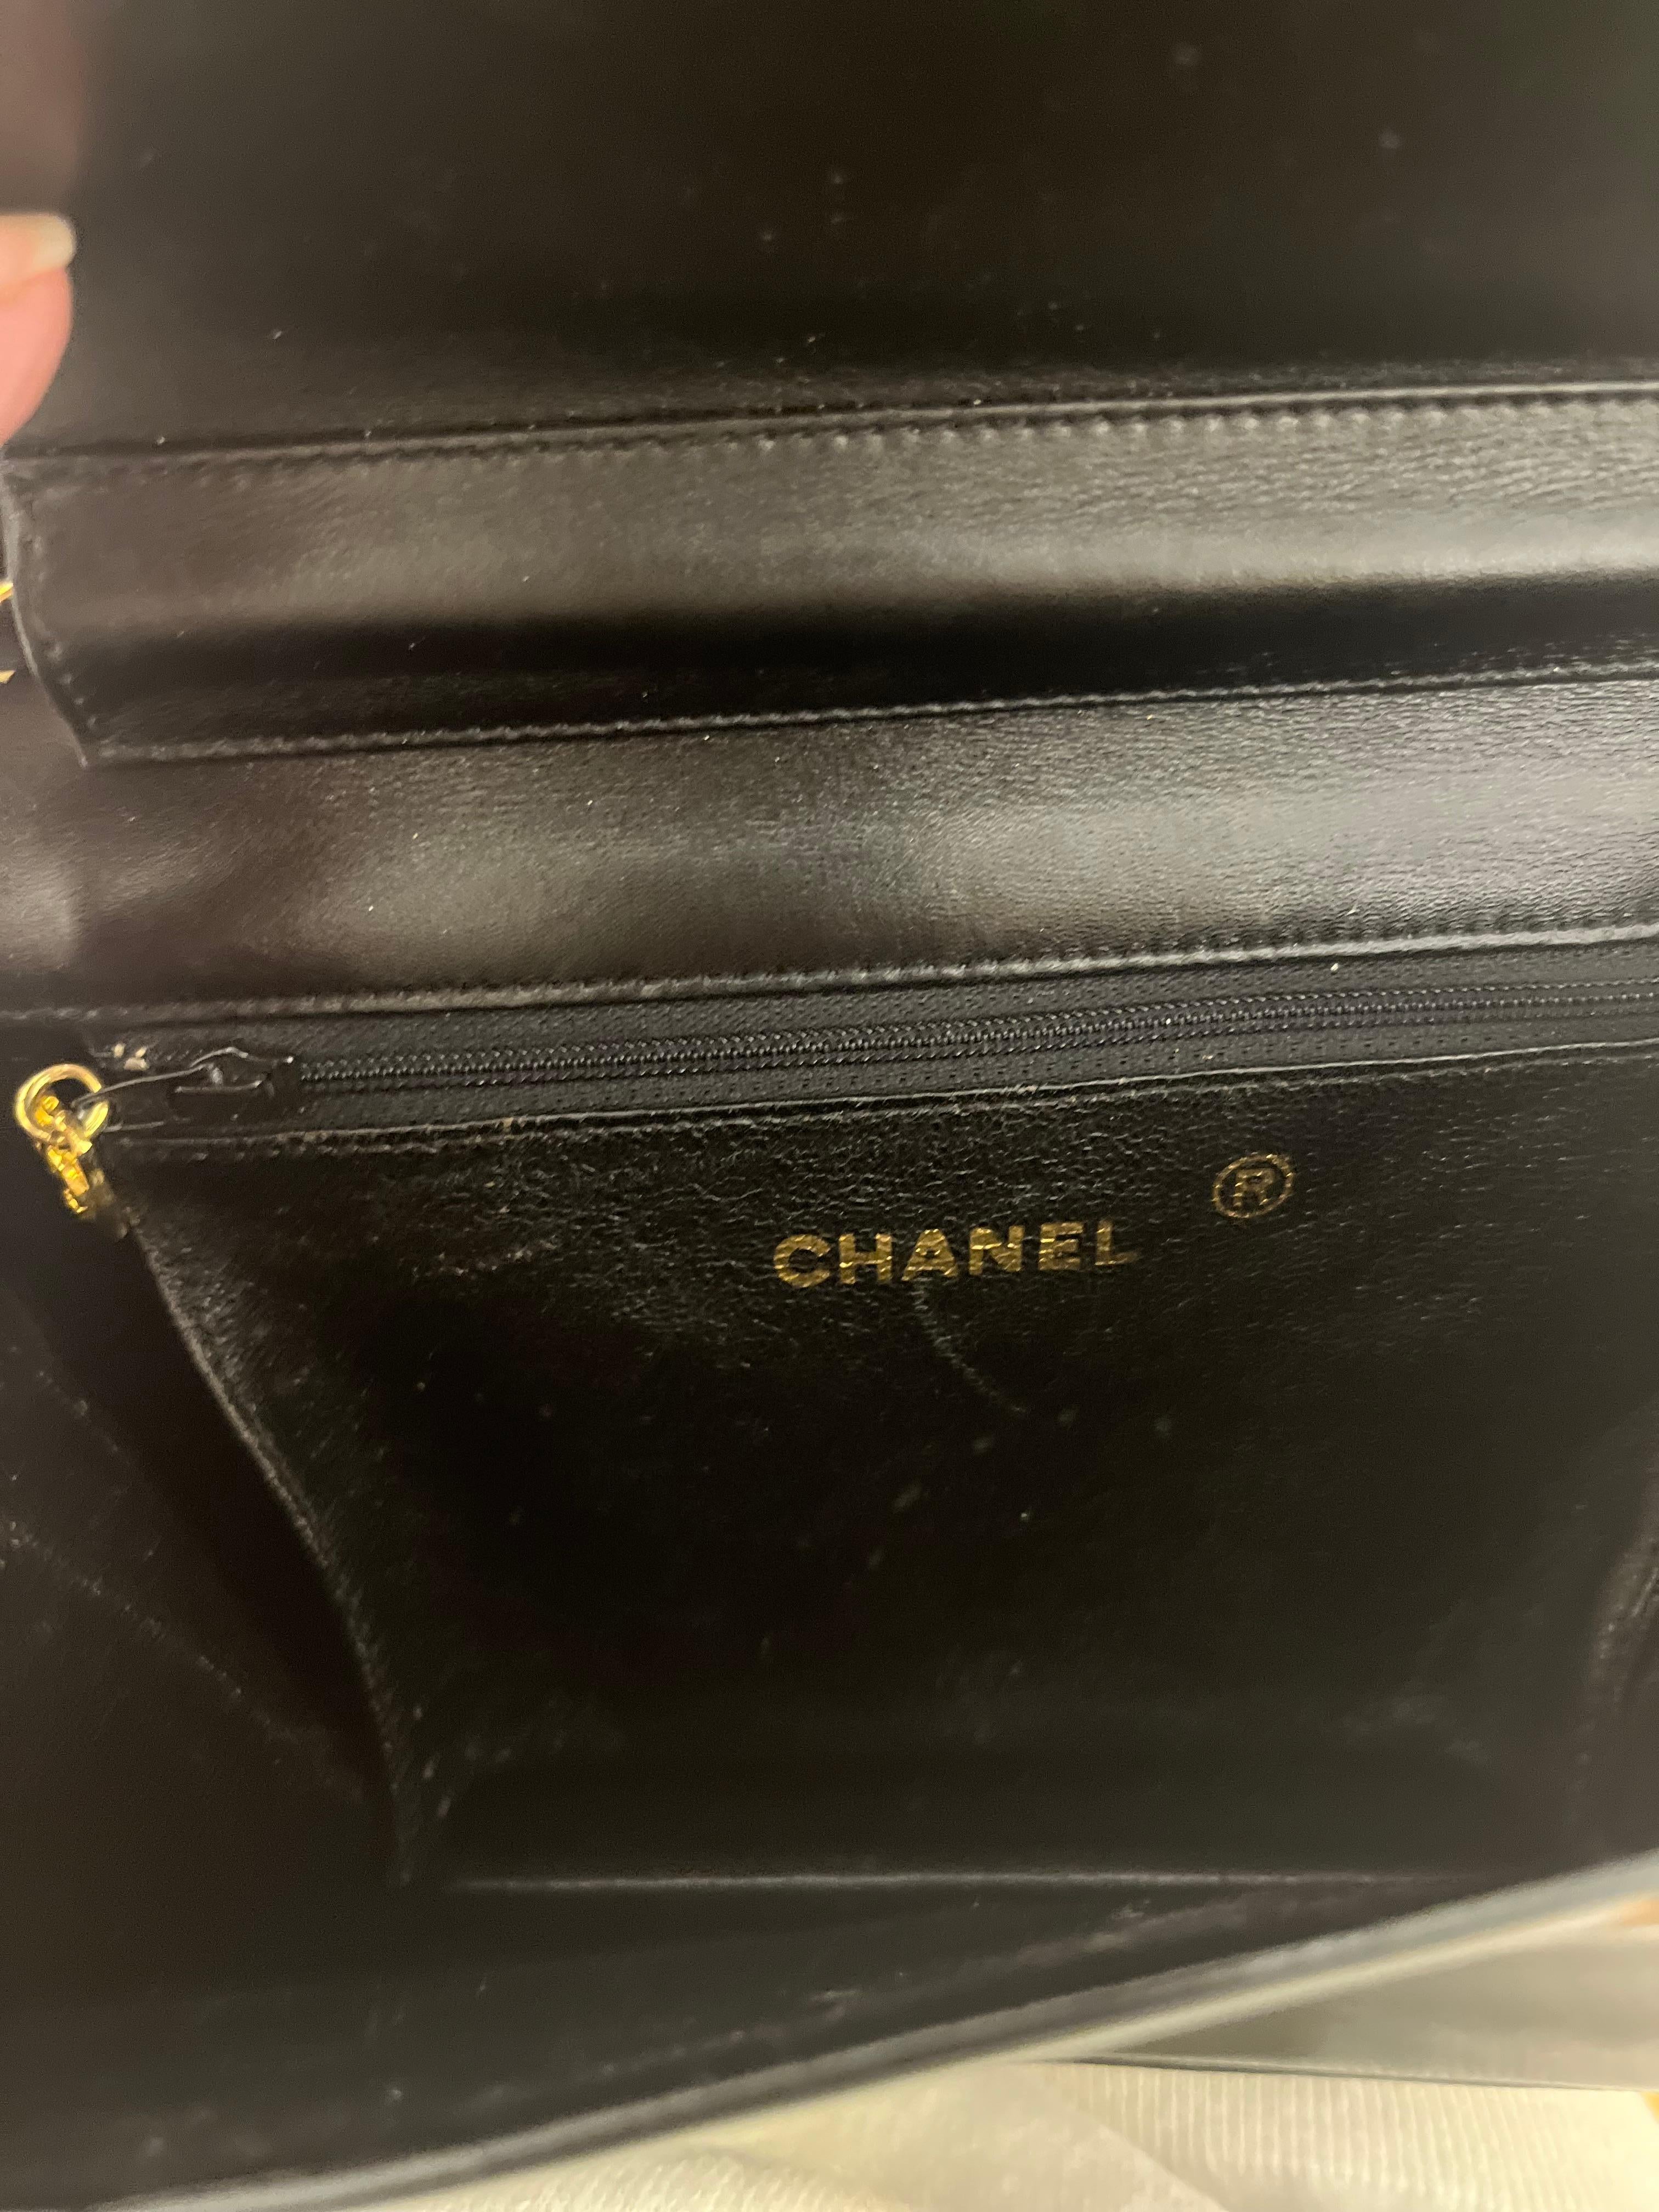 1986-88 Chanel Black Patent Leather Handbag w/COA and Card 3